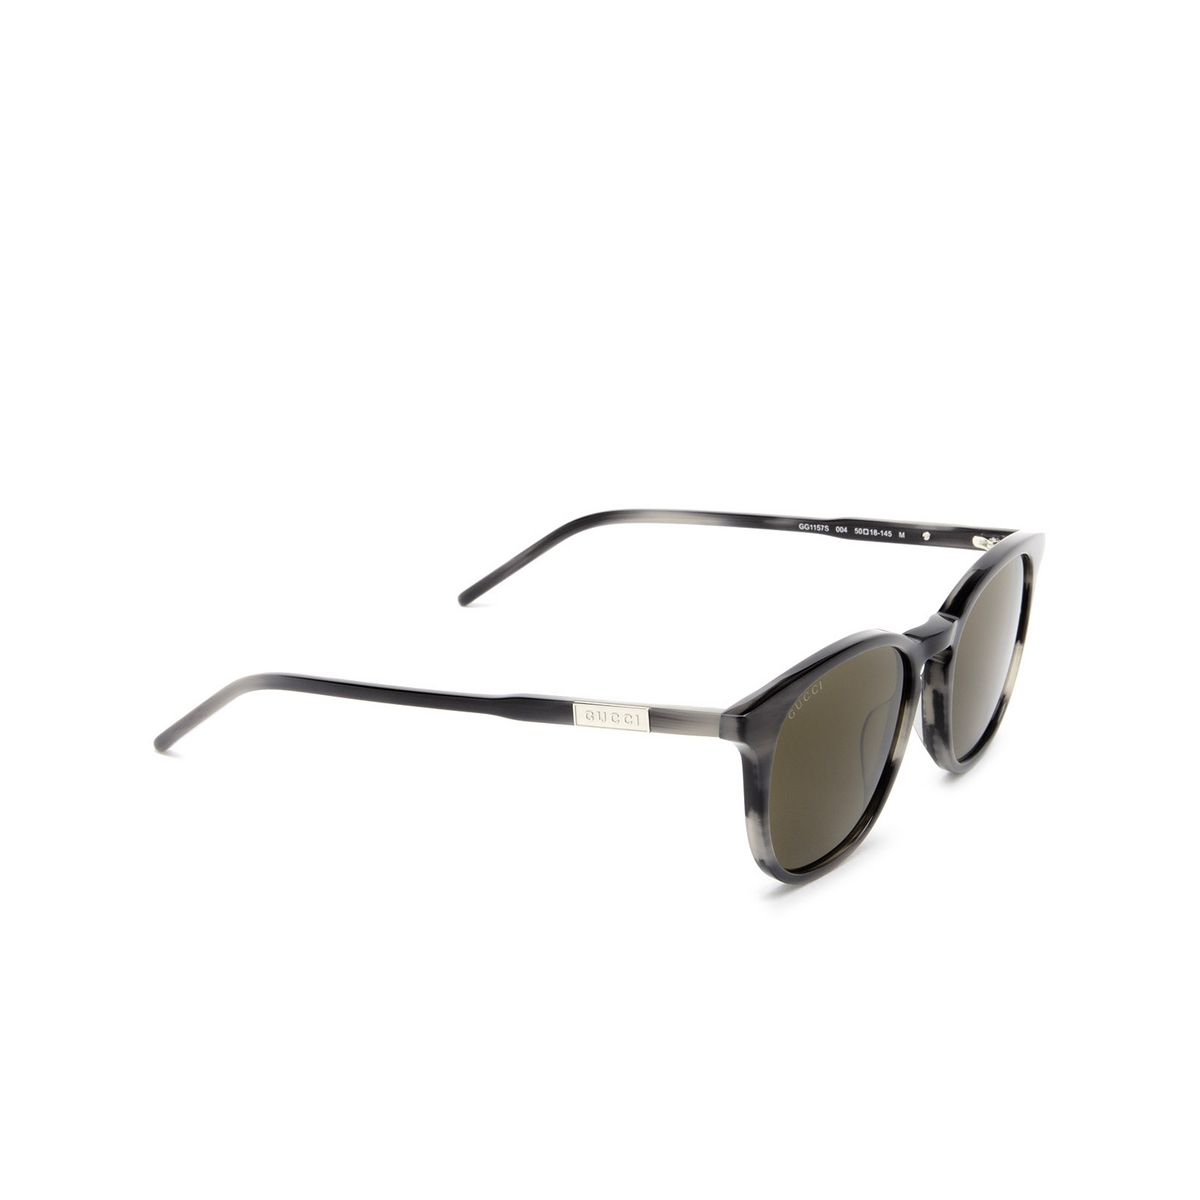 Gucci® Round Sunglasses: GG1157S color Grey 004 - three-quarters view.